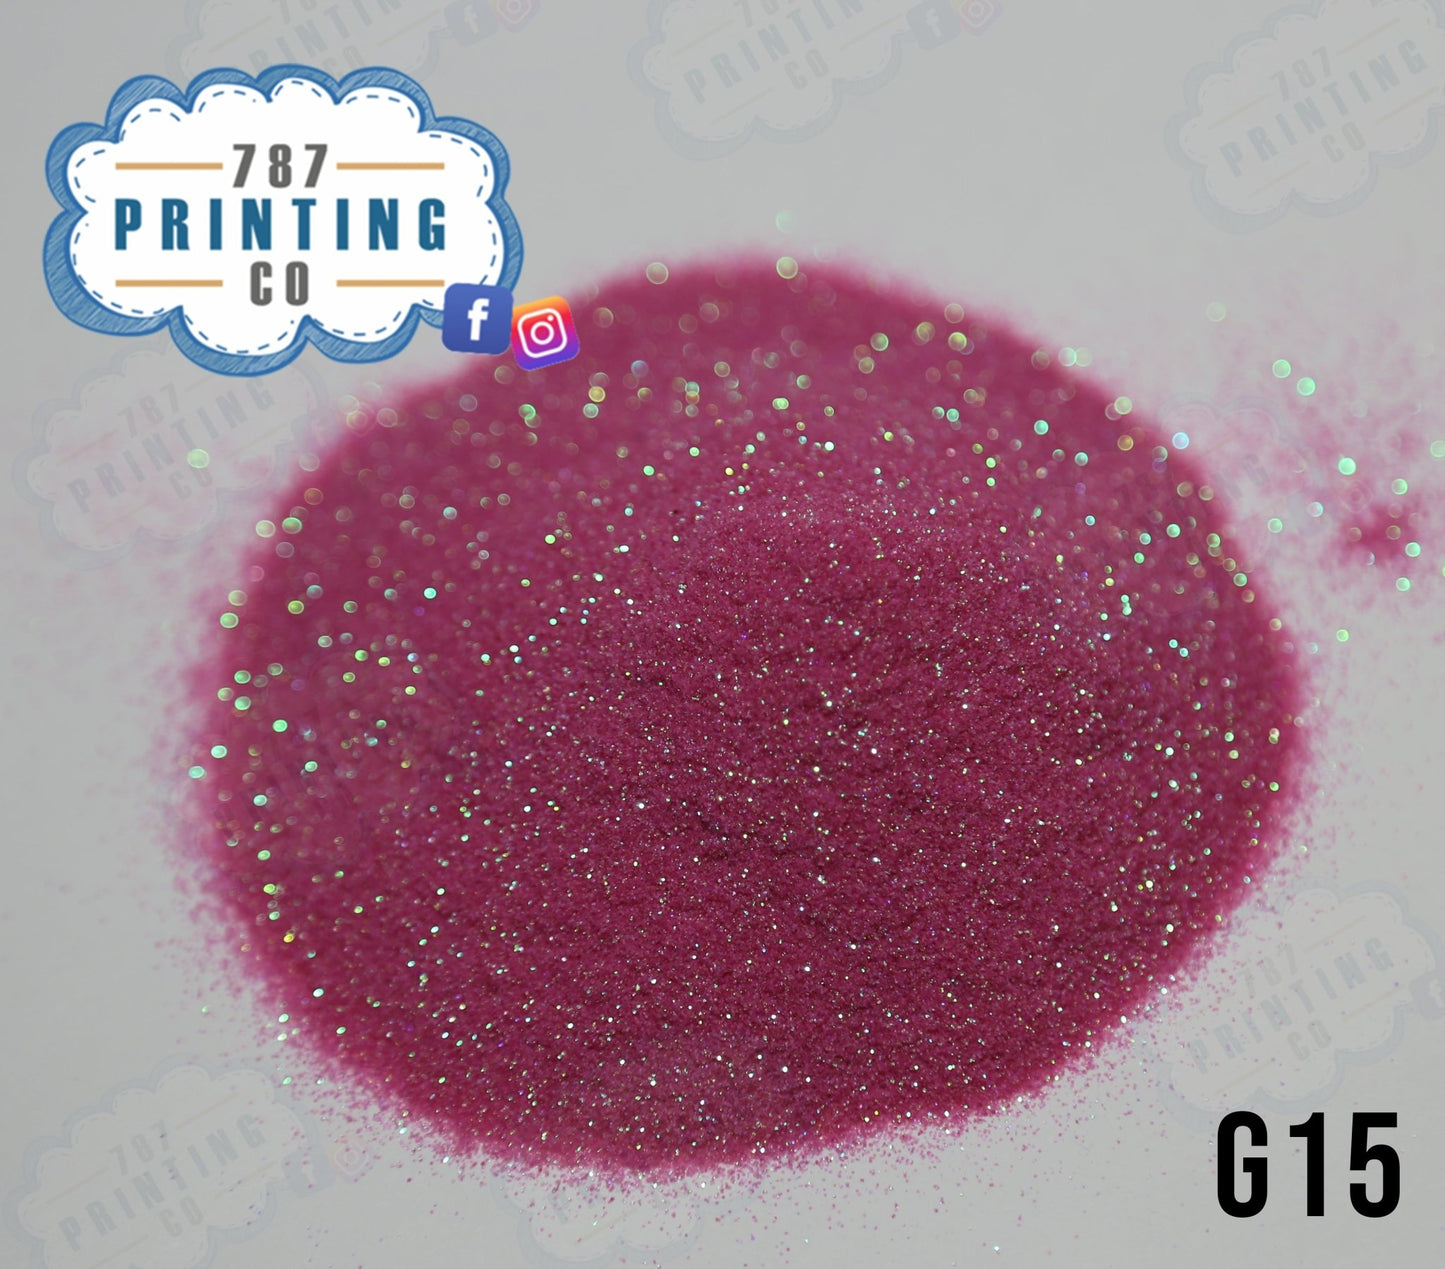 Flamenco Ultra Fine Glitter 1/128 (G15) - 787 Printing Co.